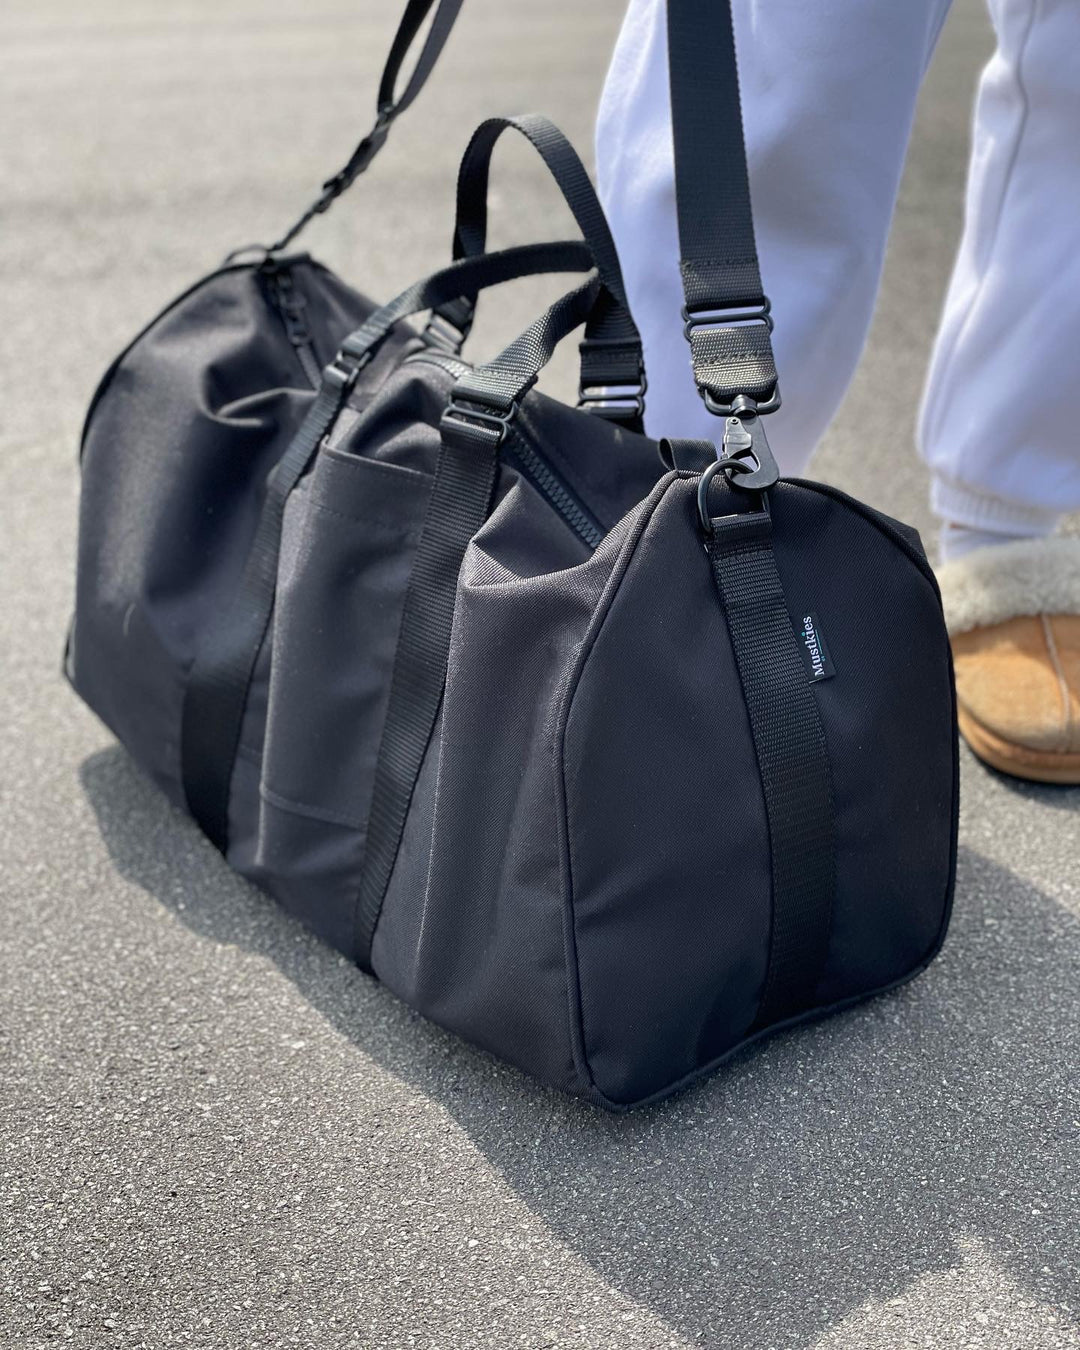 Mk Gdledy Checkered Travel Duffel Bag Weekend Overnight Luggage Shoulder Bag with Adjustable Strap for Men Women -M/Black, Adult Unisex, Size: 17.7